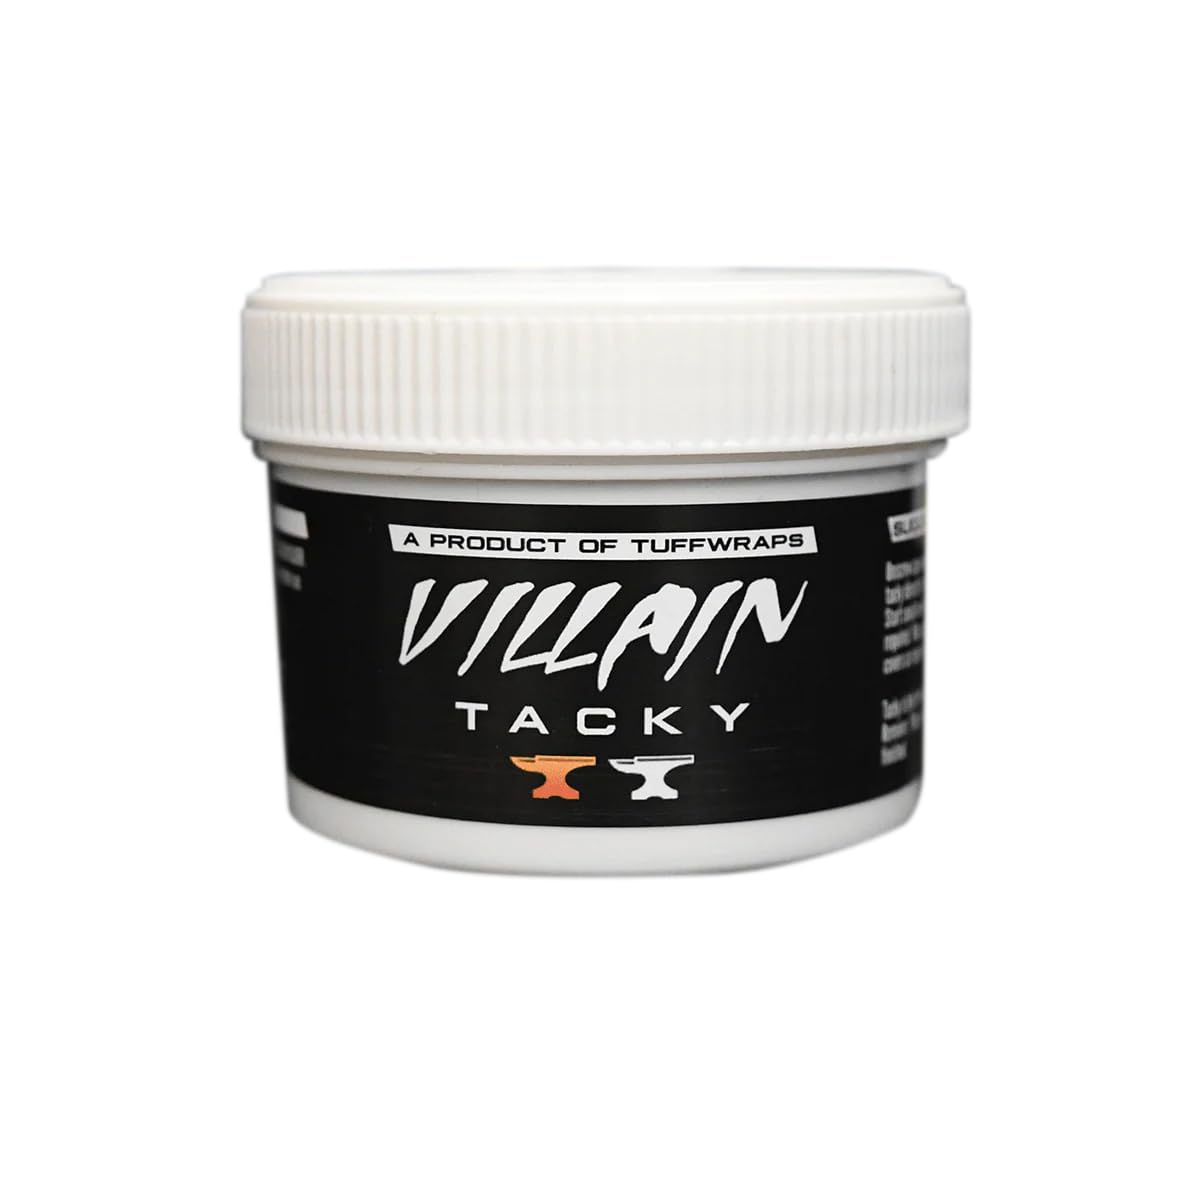 TuffWraps Villain Tacky Atlas Stone/Strongman Tacky - Enhanced Performance & Durability for Strength Training - Training Grade - 120g